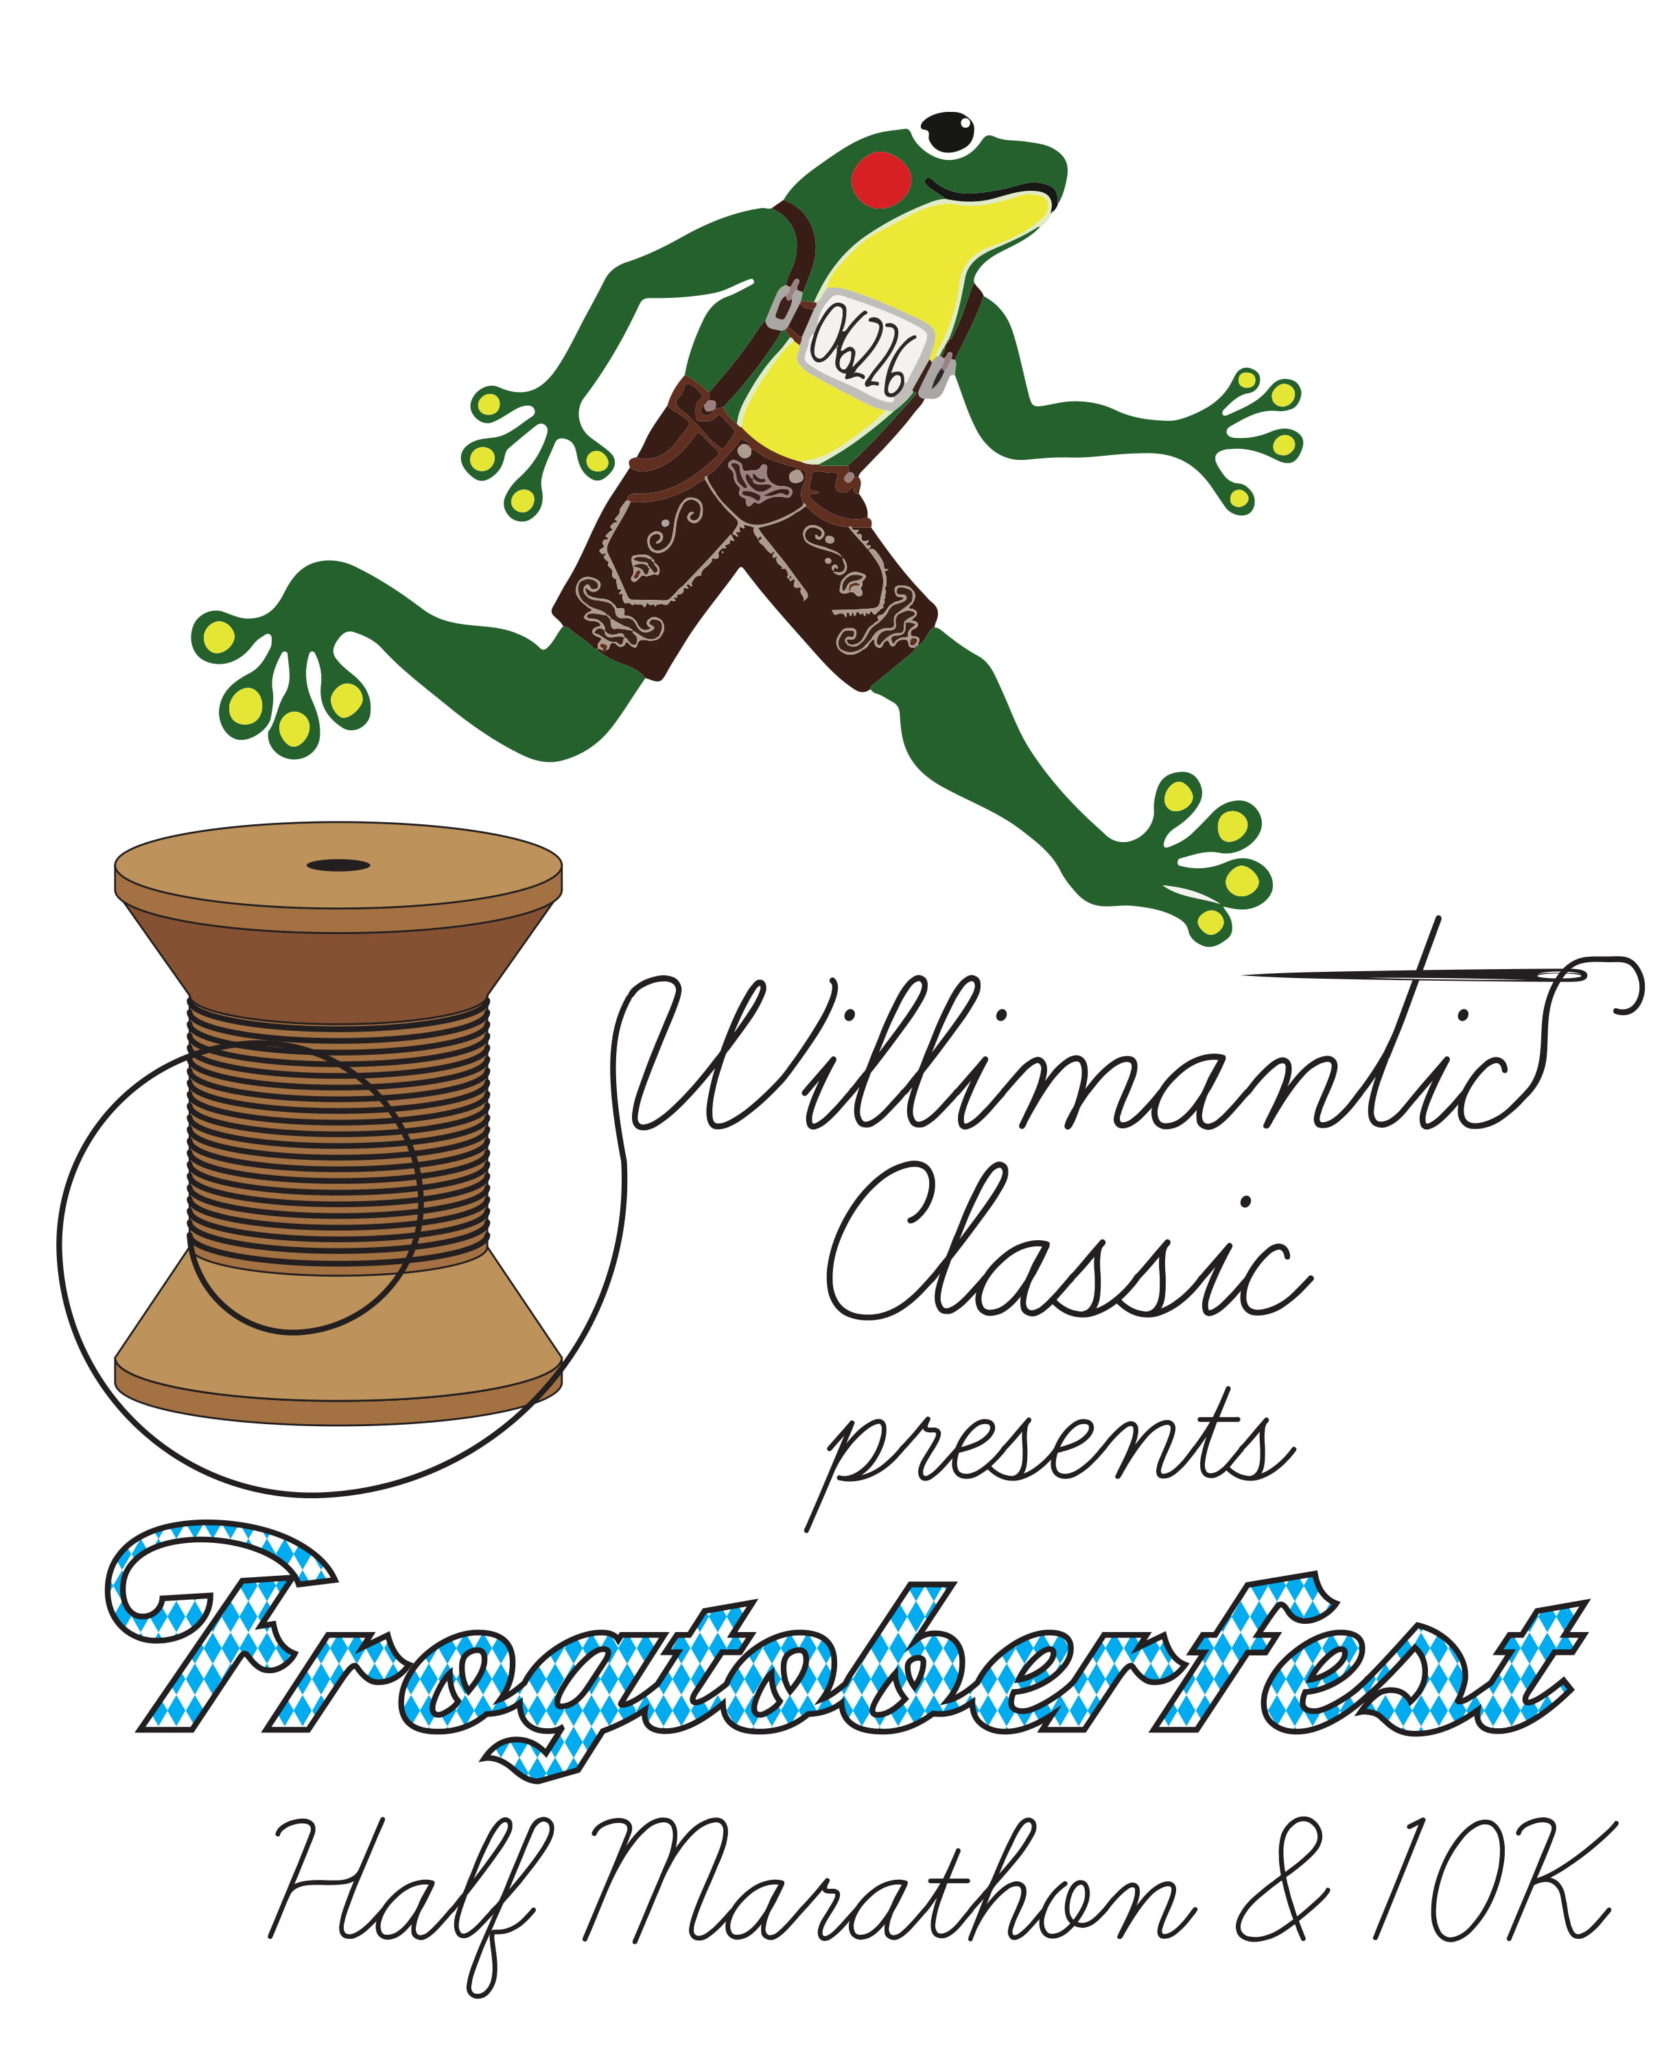 Willimantic Frogtoberfest Half Marathon & 10K logo on RaceRaves